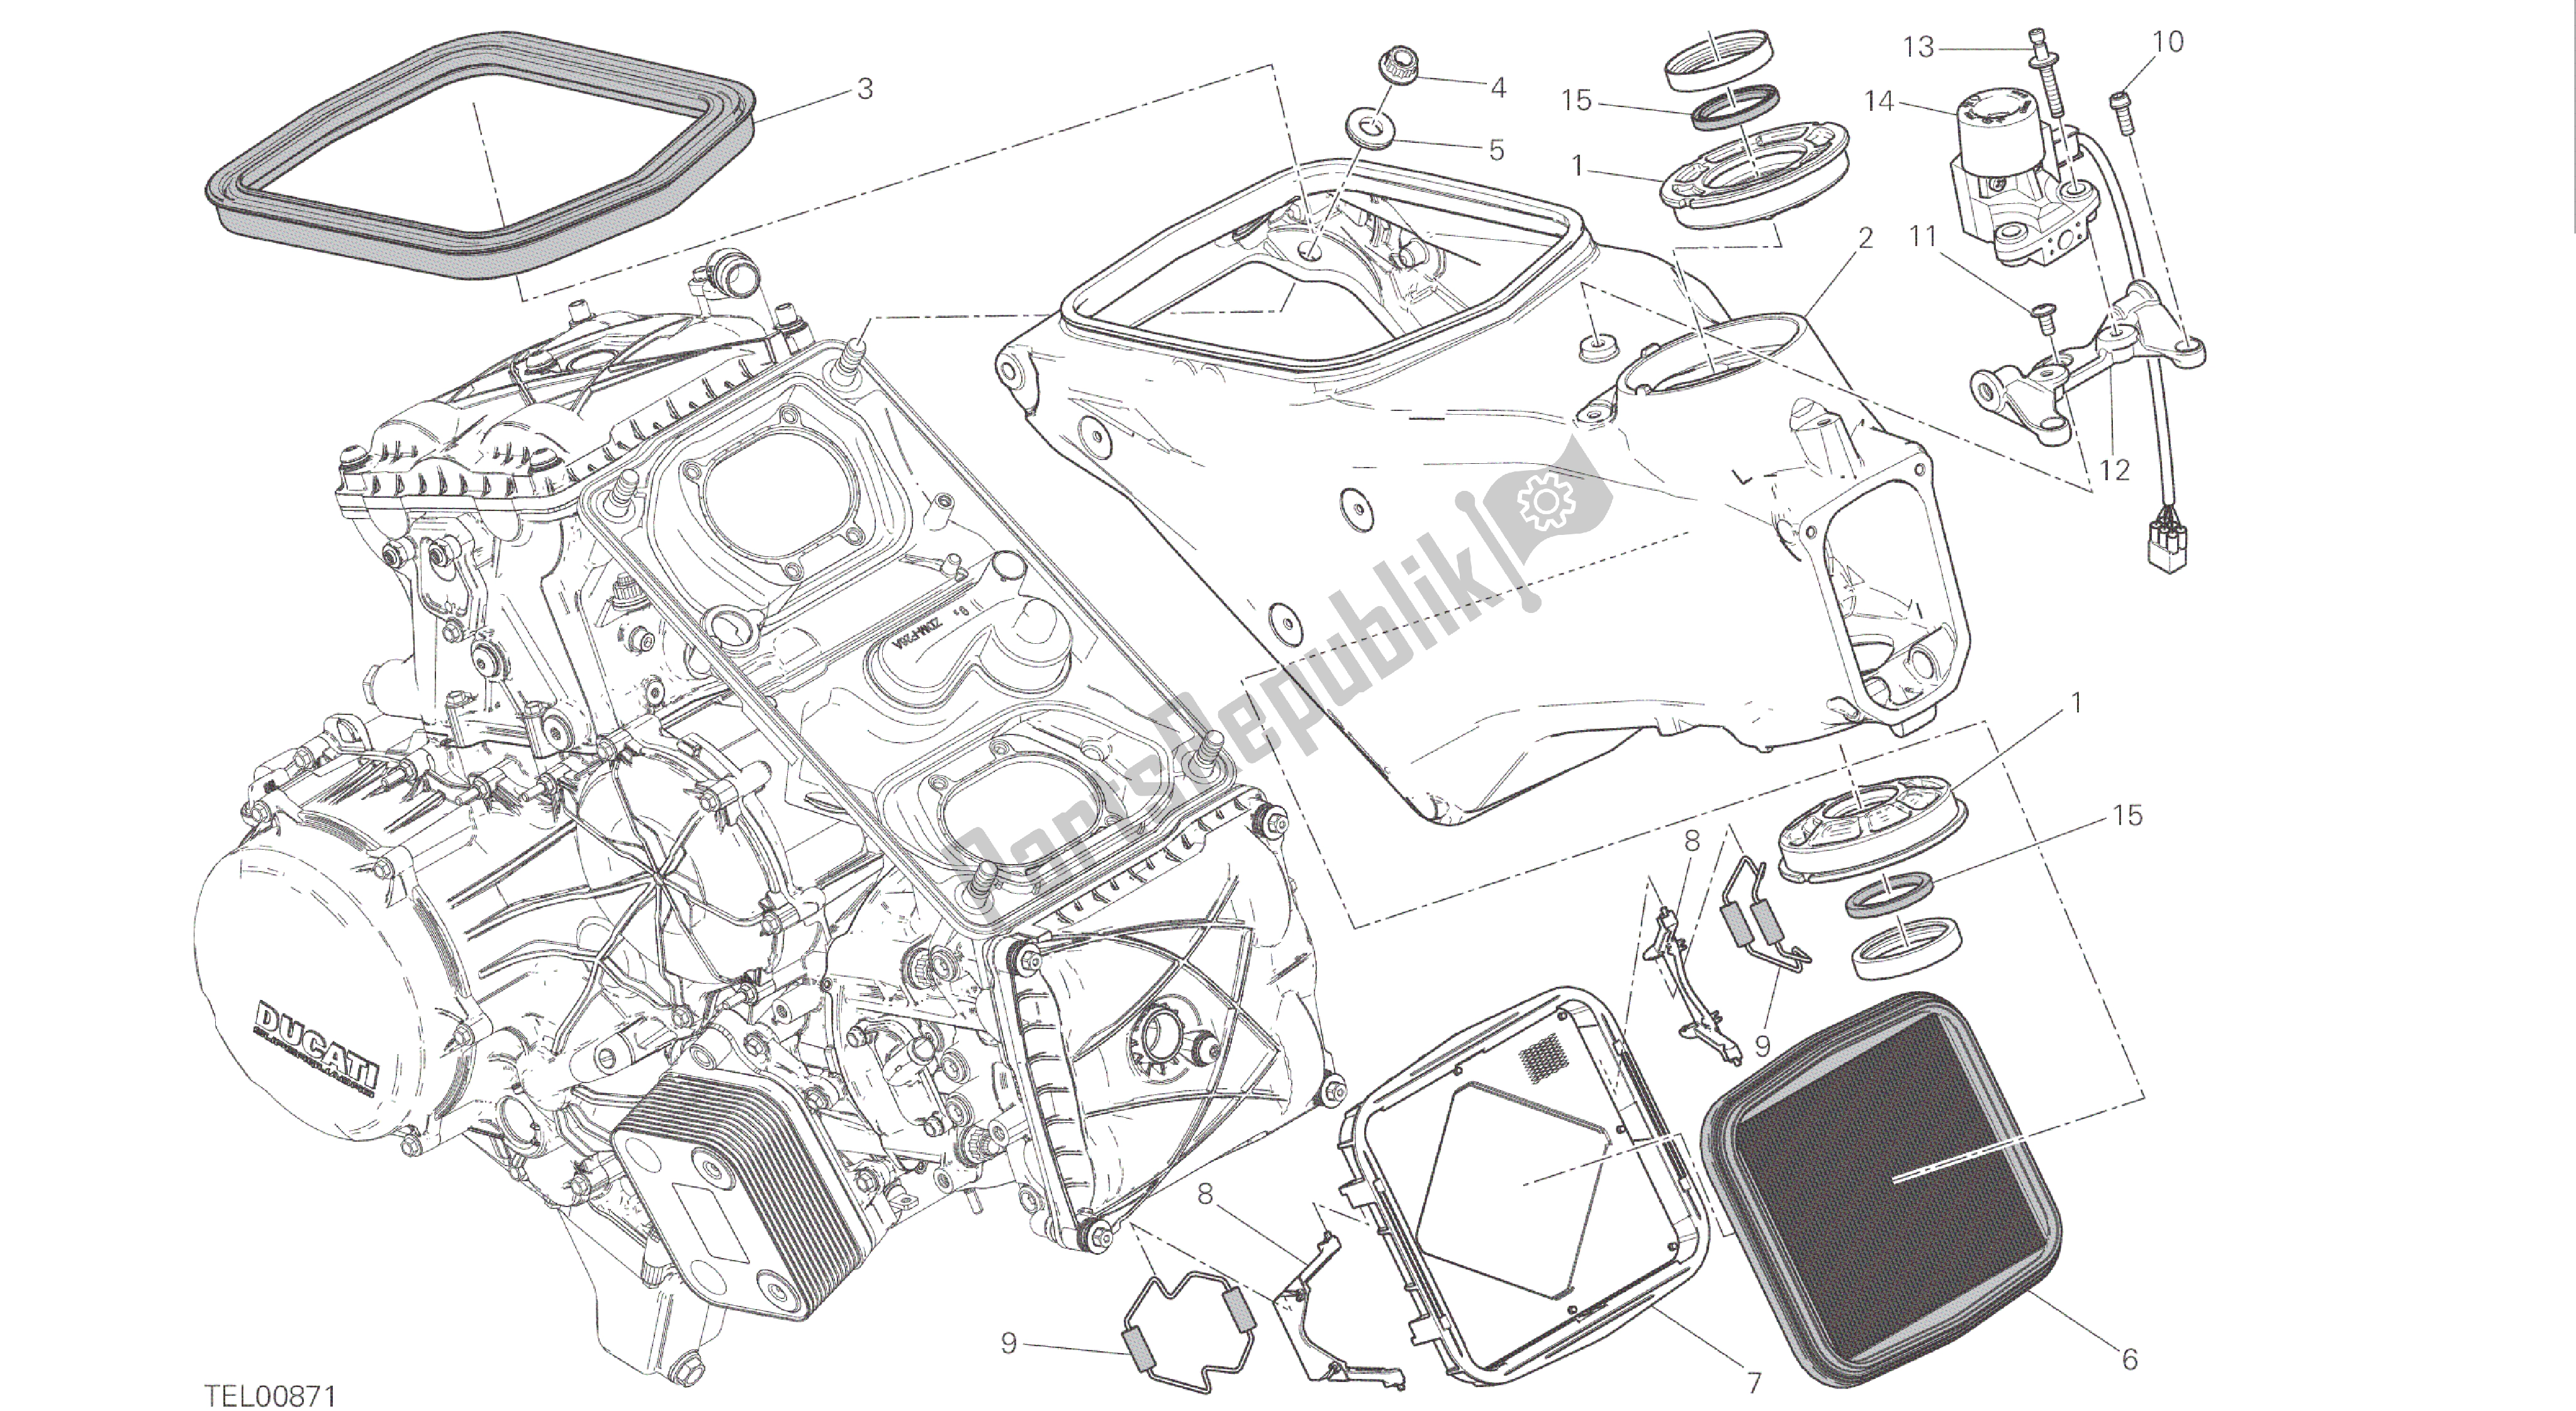 Todas as partes de Desenho 022 - Quadro [mod: 1299s; Xst: Aus, Eur, Fra, Jap, Twn] Quadro De Grupo do Ducati Panigale S ABS 1299 2016